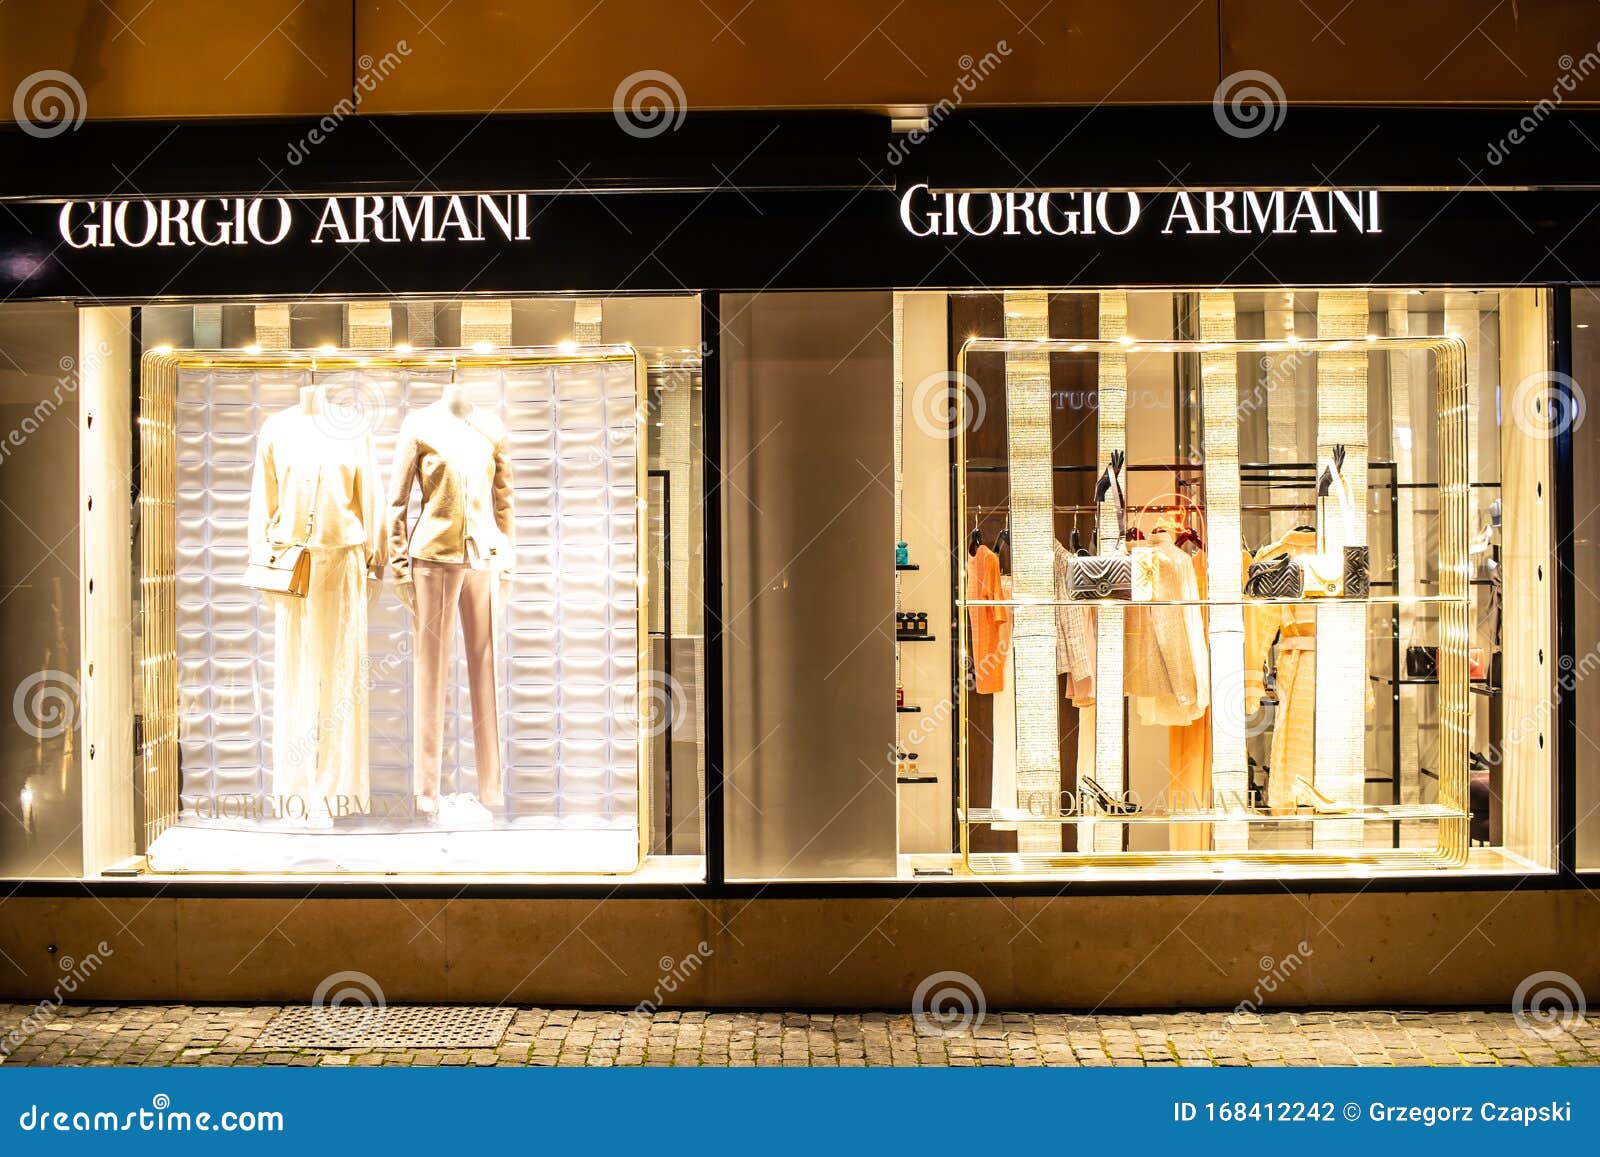 Giorgio Armani Fashion Store, Window Shop, Clothes, Shoes on Display for  Sale, Modern Giorgio Armani Fashion House Editorial Photography - Image of  business, fashion: 168412242